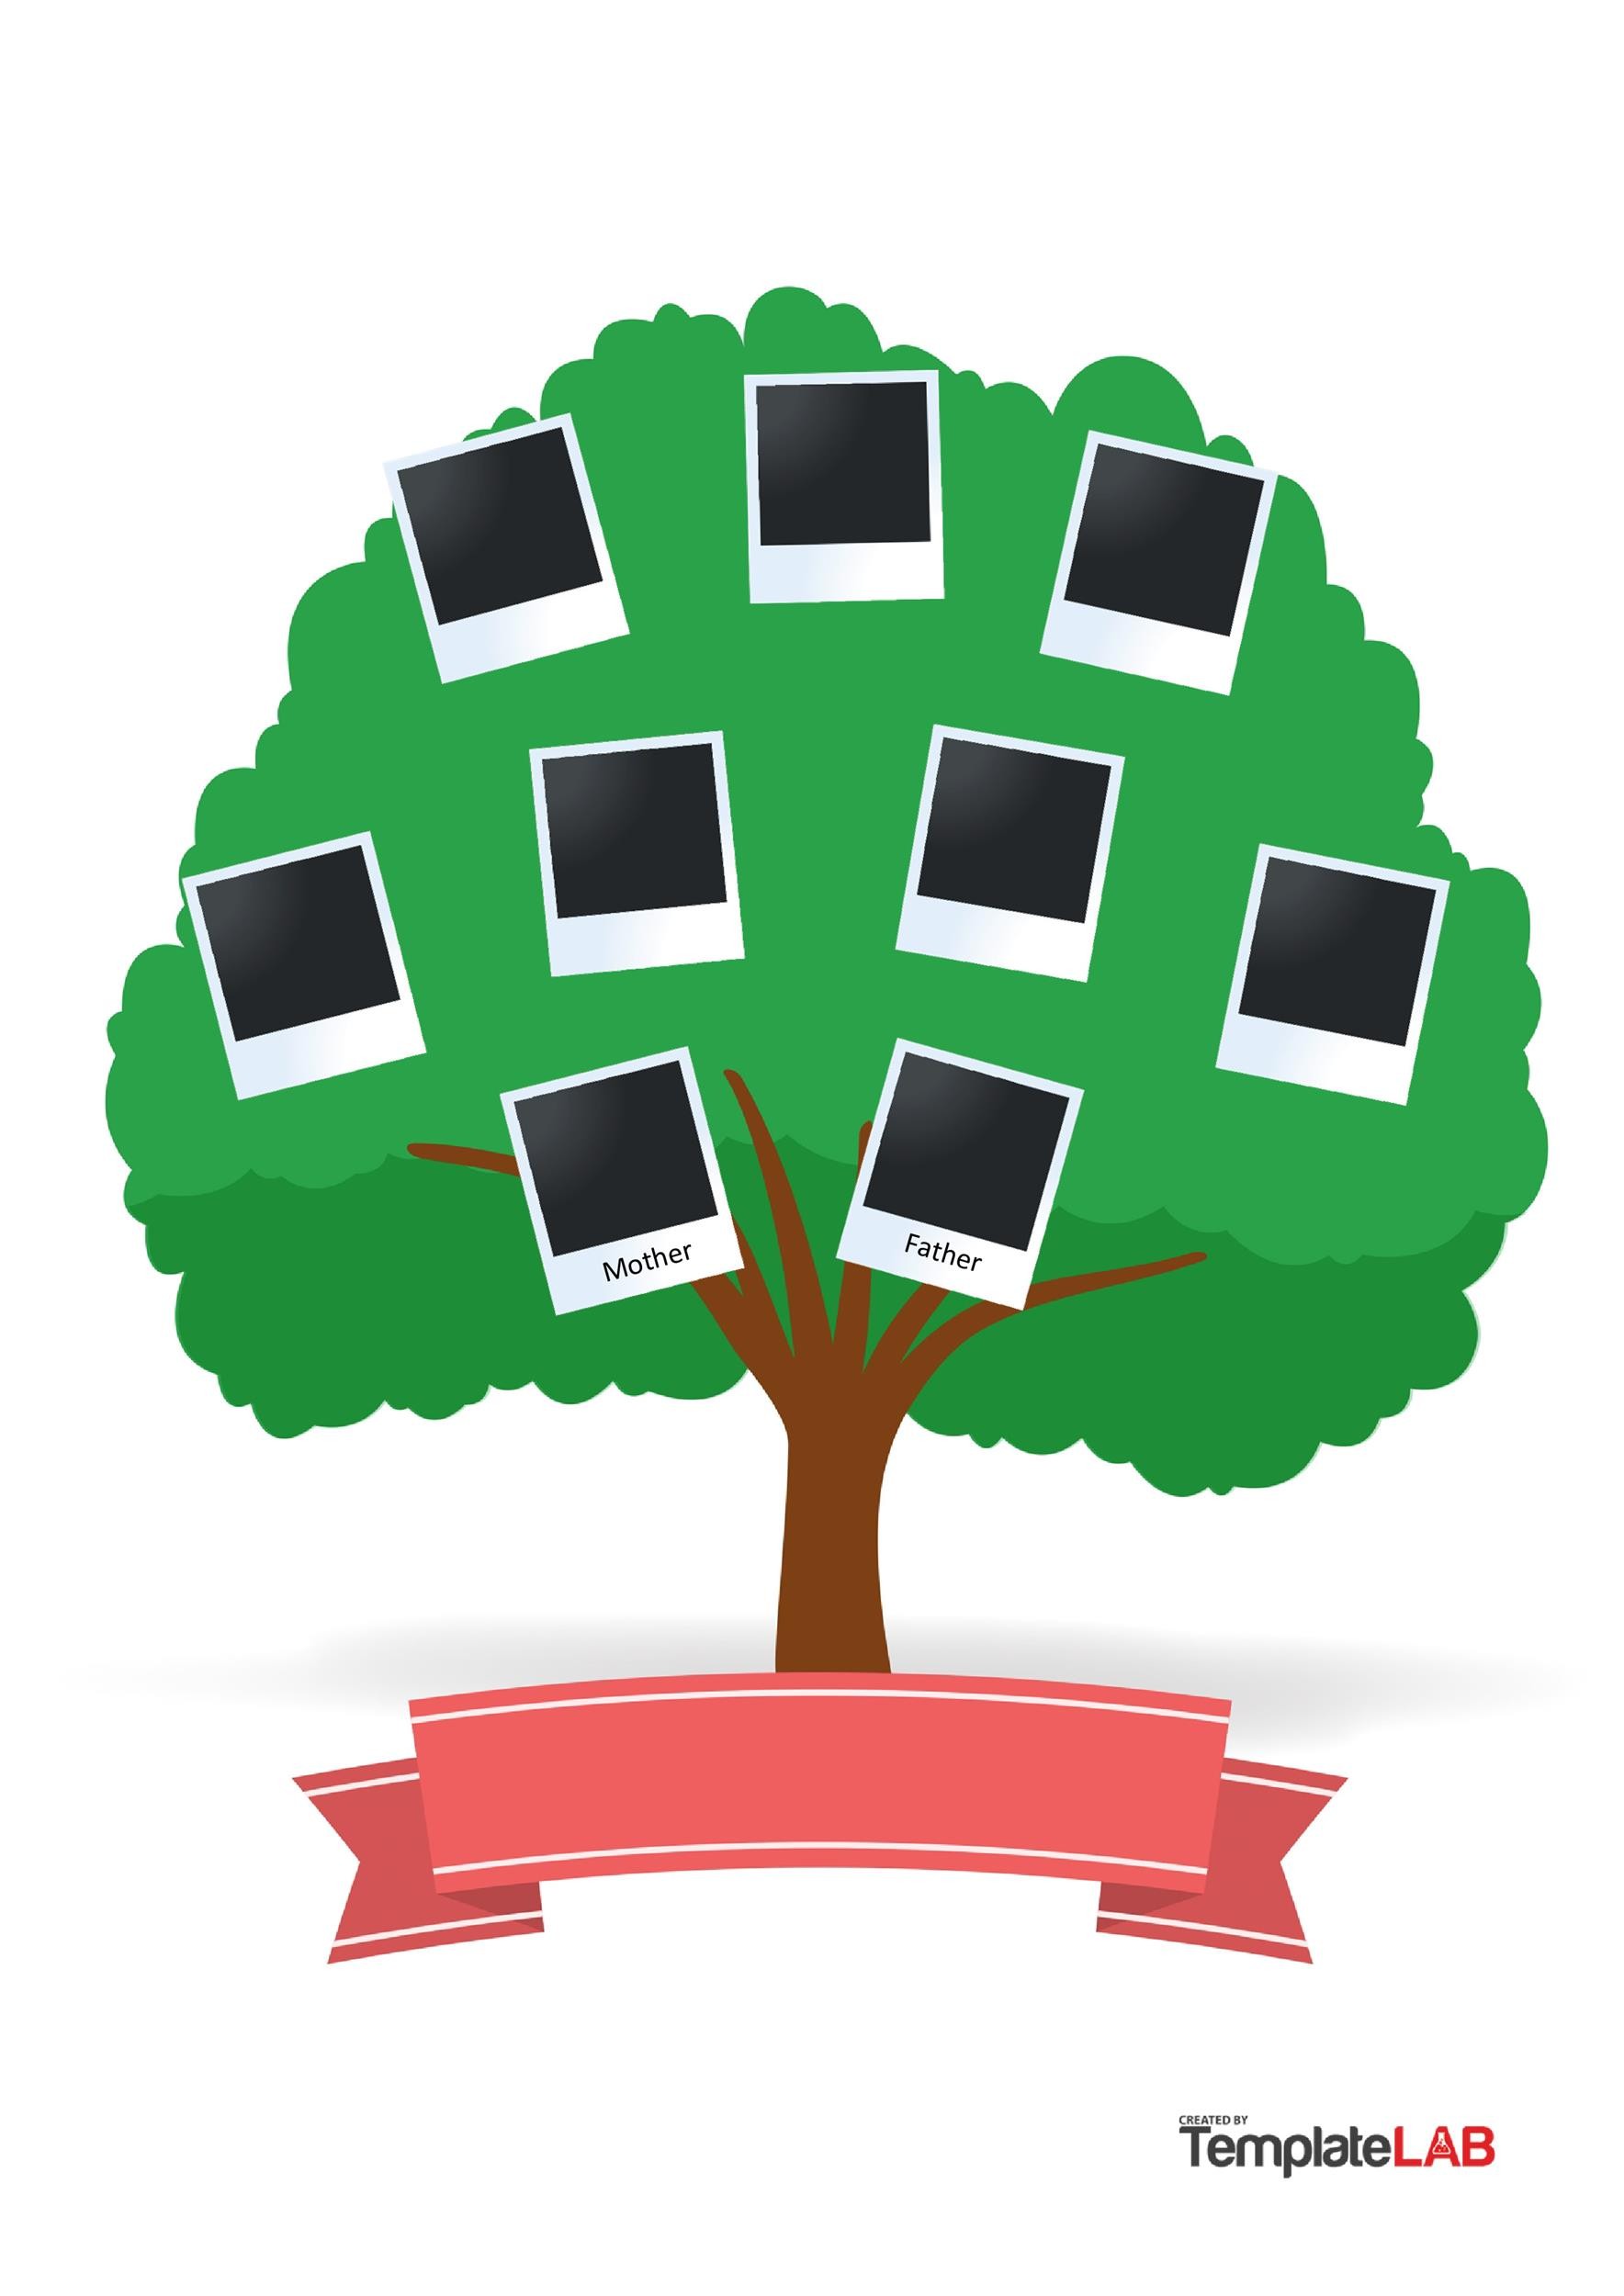 41+ Free Family Tree Templates (Word, Excel, PDF) ᐅ ...